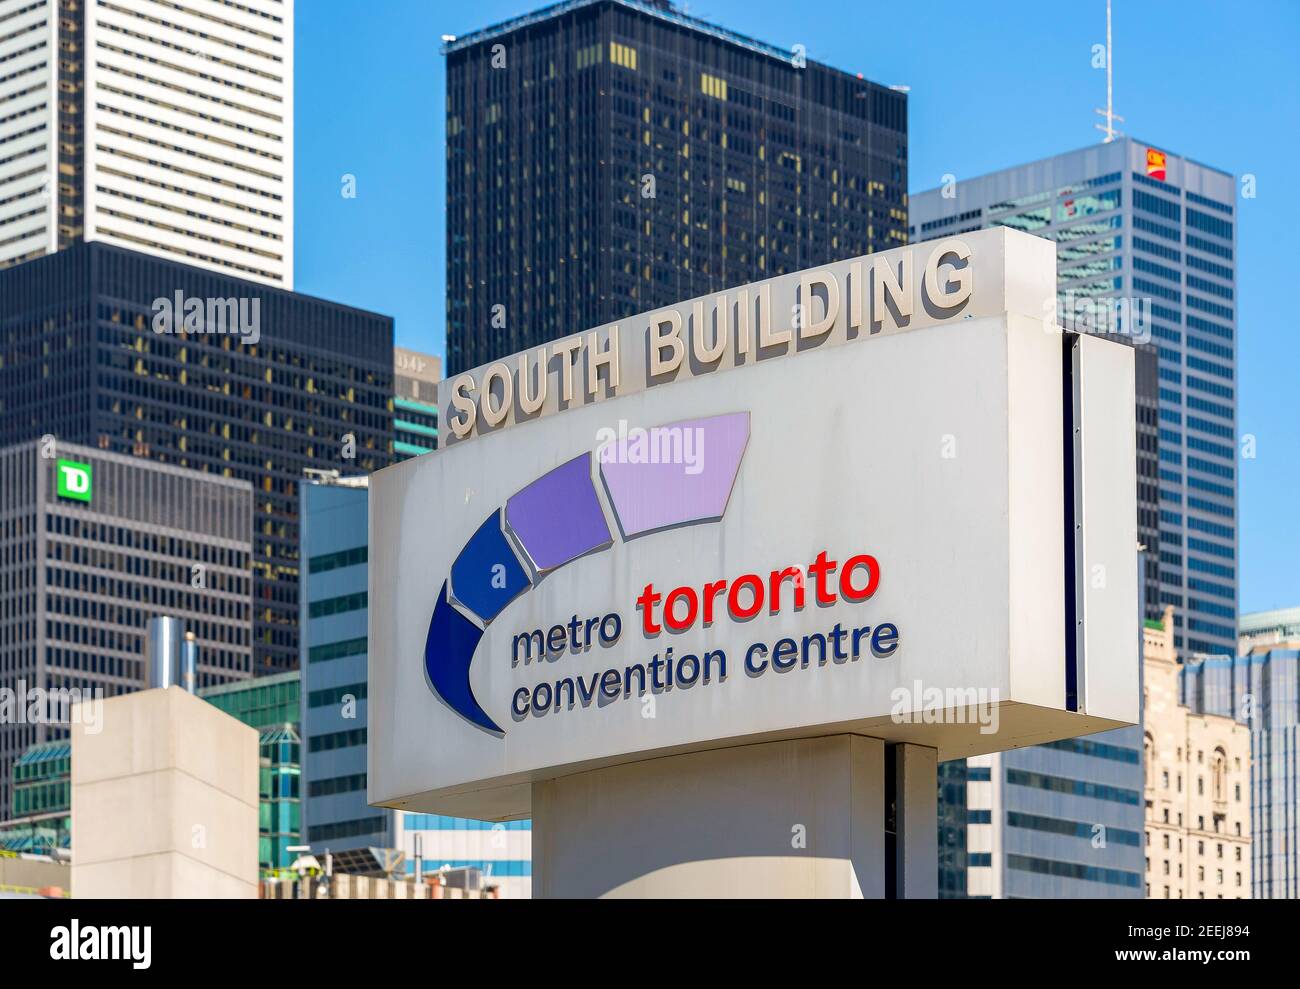 Metro Toronto convention center sign: South building Stock Photo